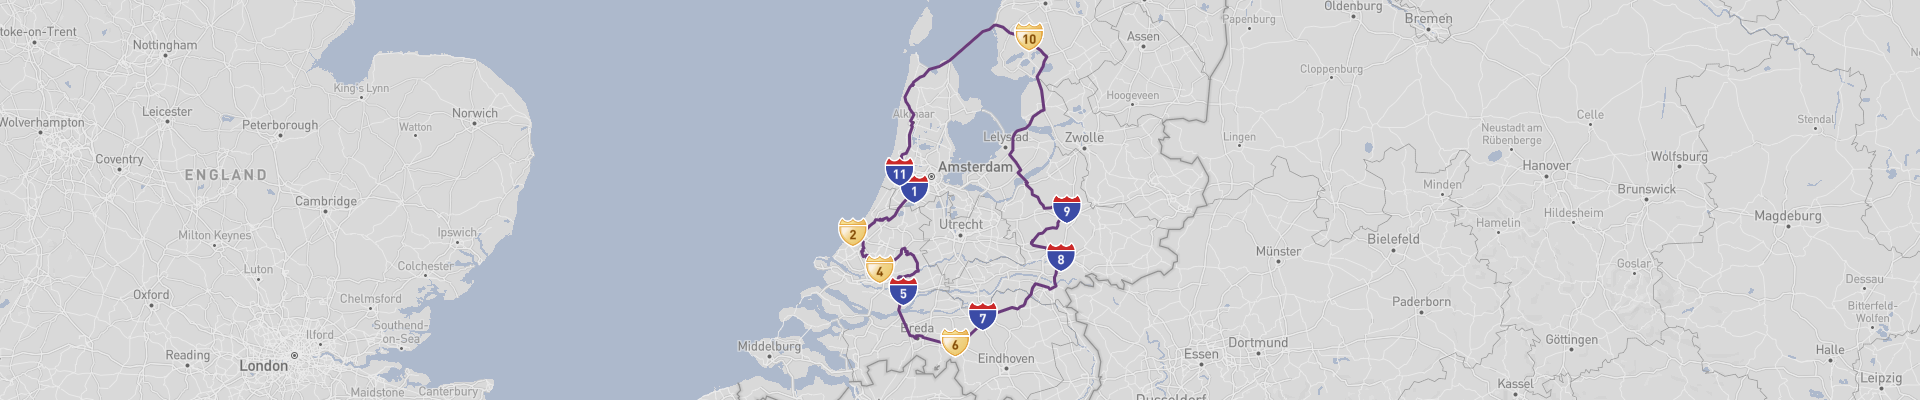 Netherlands Road Trip